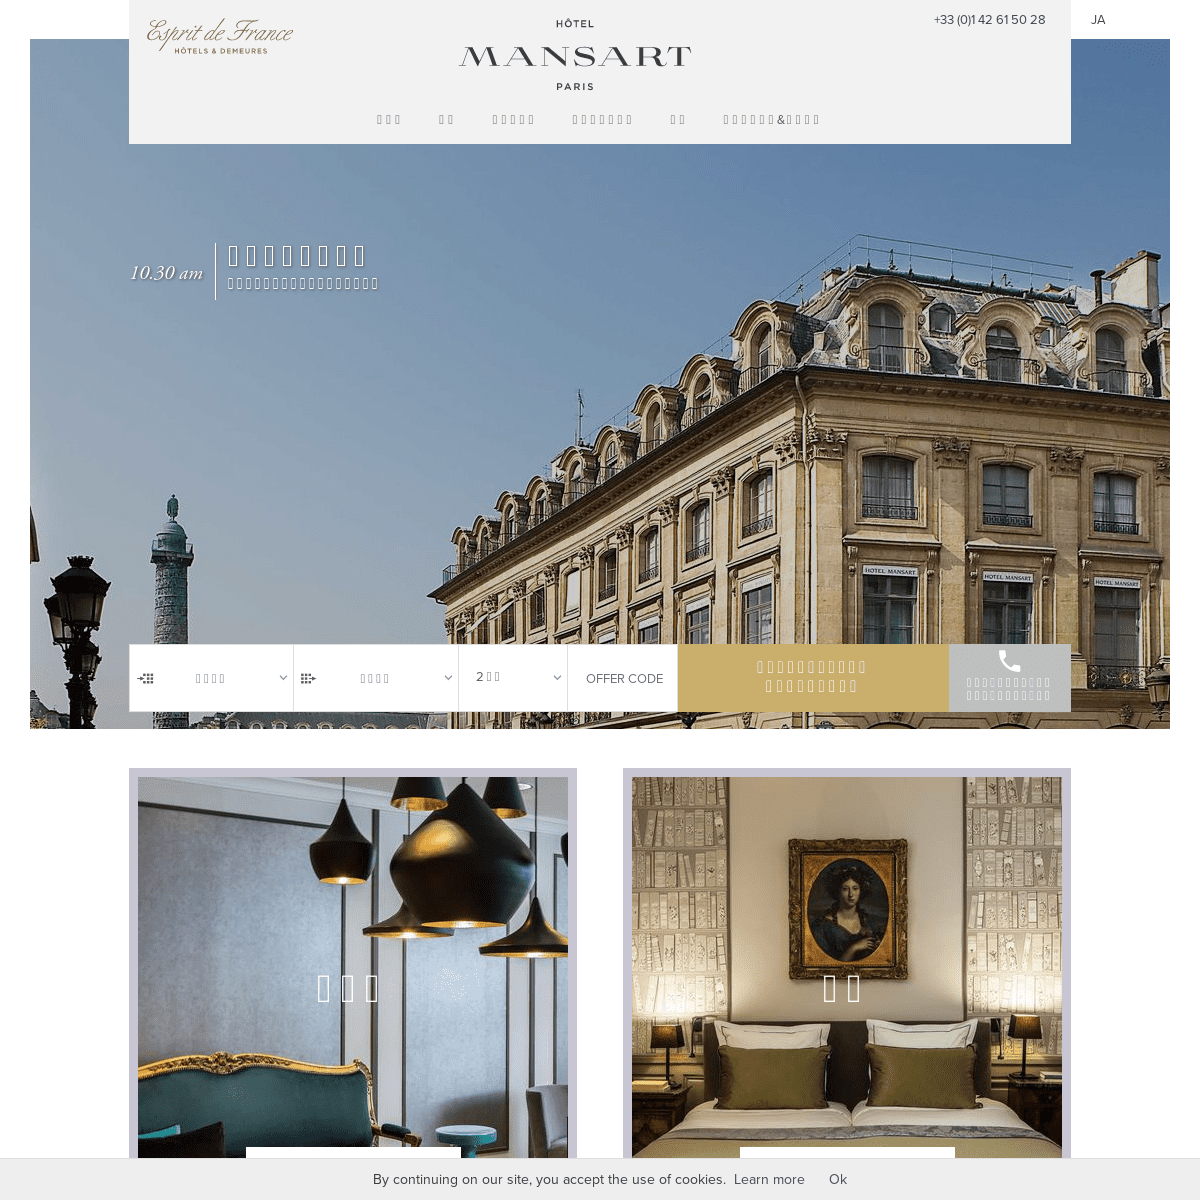 A complete backup of paris-hotel-mansart.com